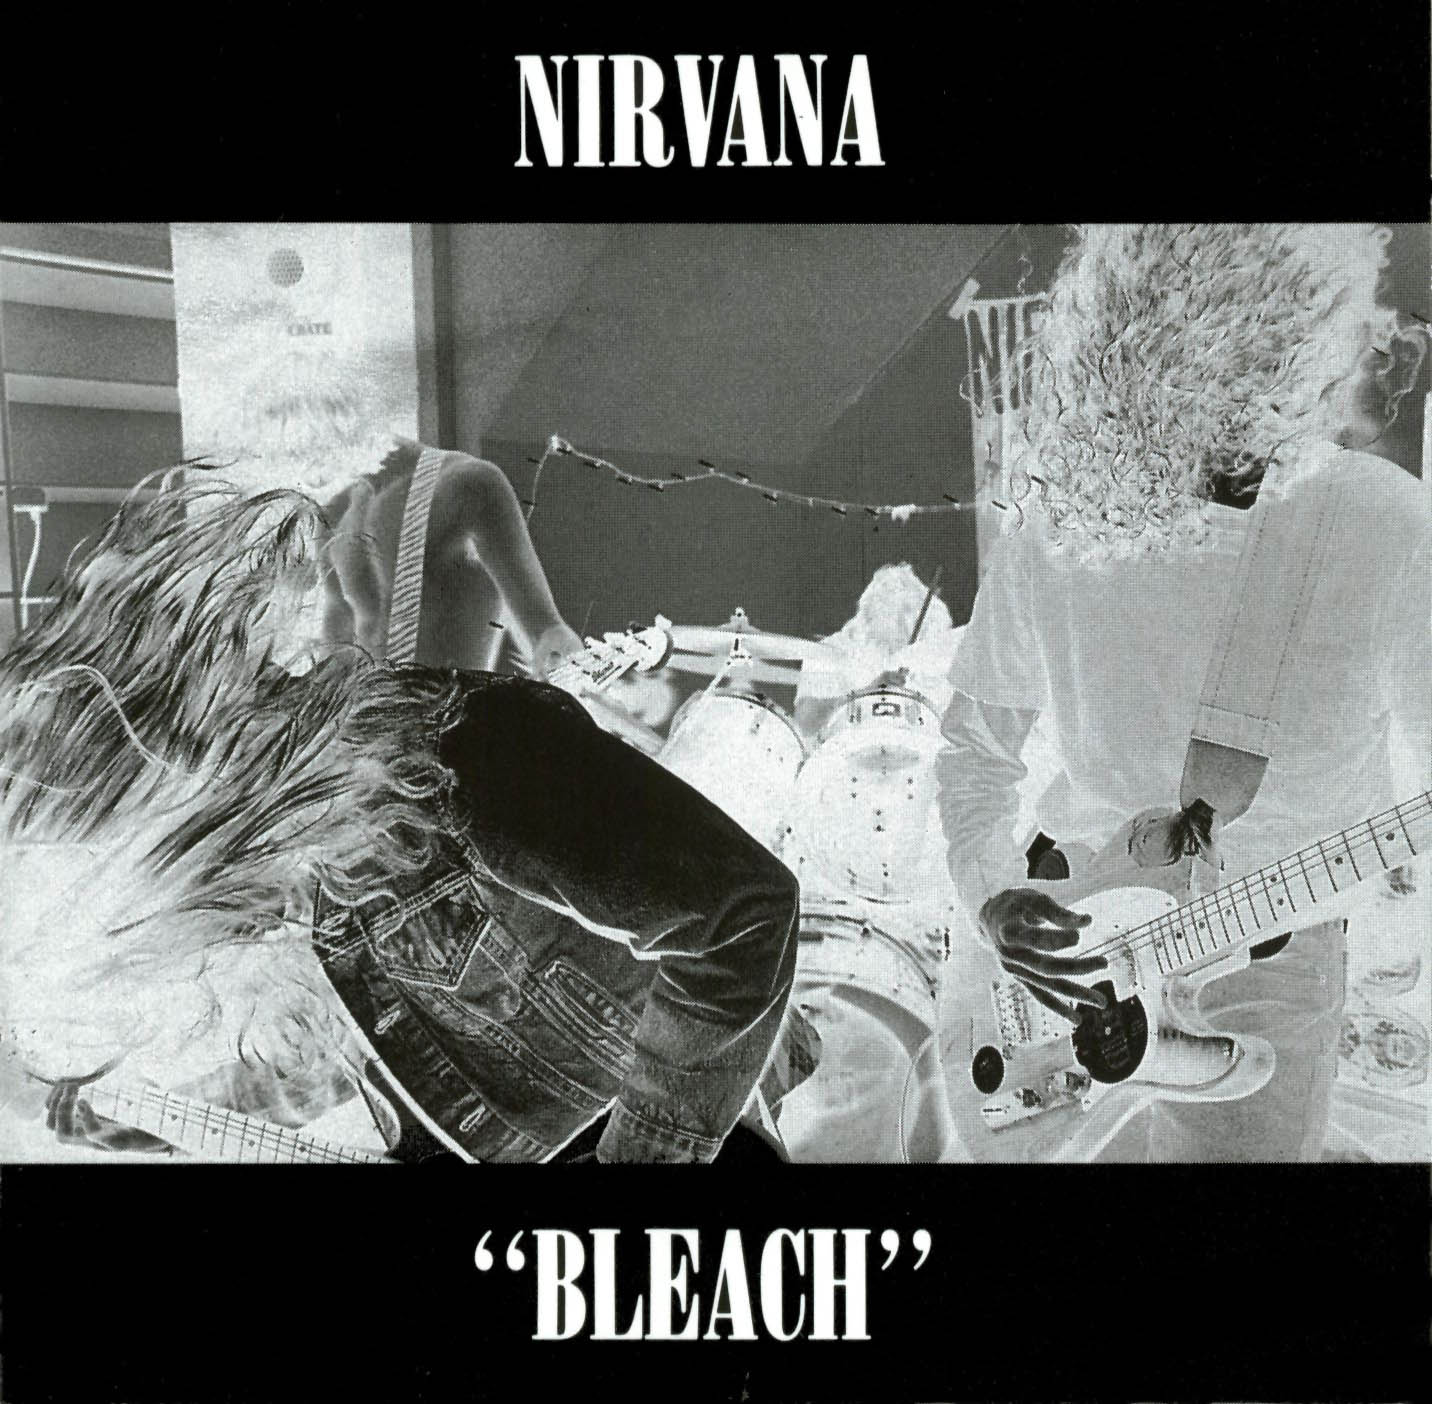 Nirvana’s ‘Bleach’ receiving 20th anniversary reissue on Sub Pop, with bonus live concert